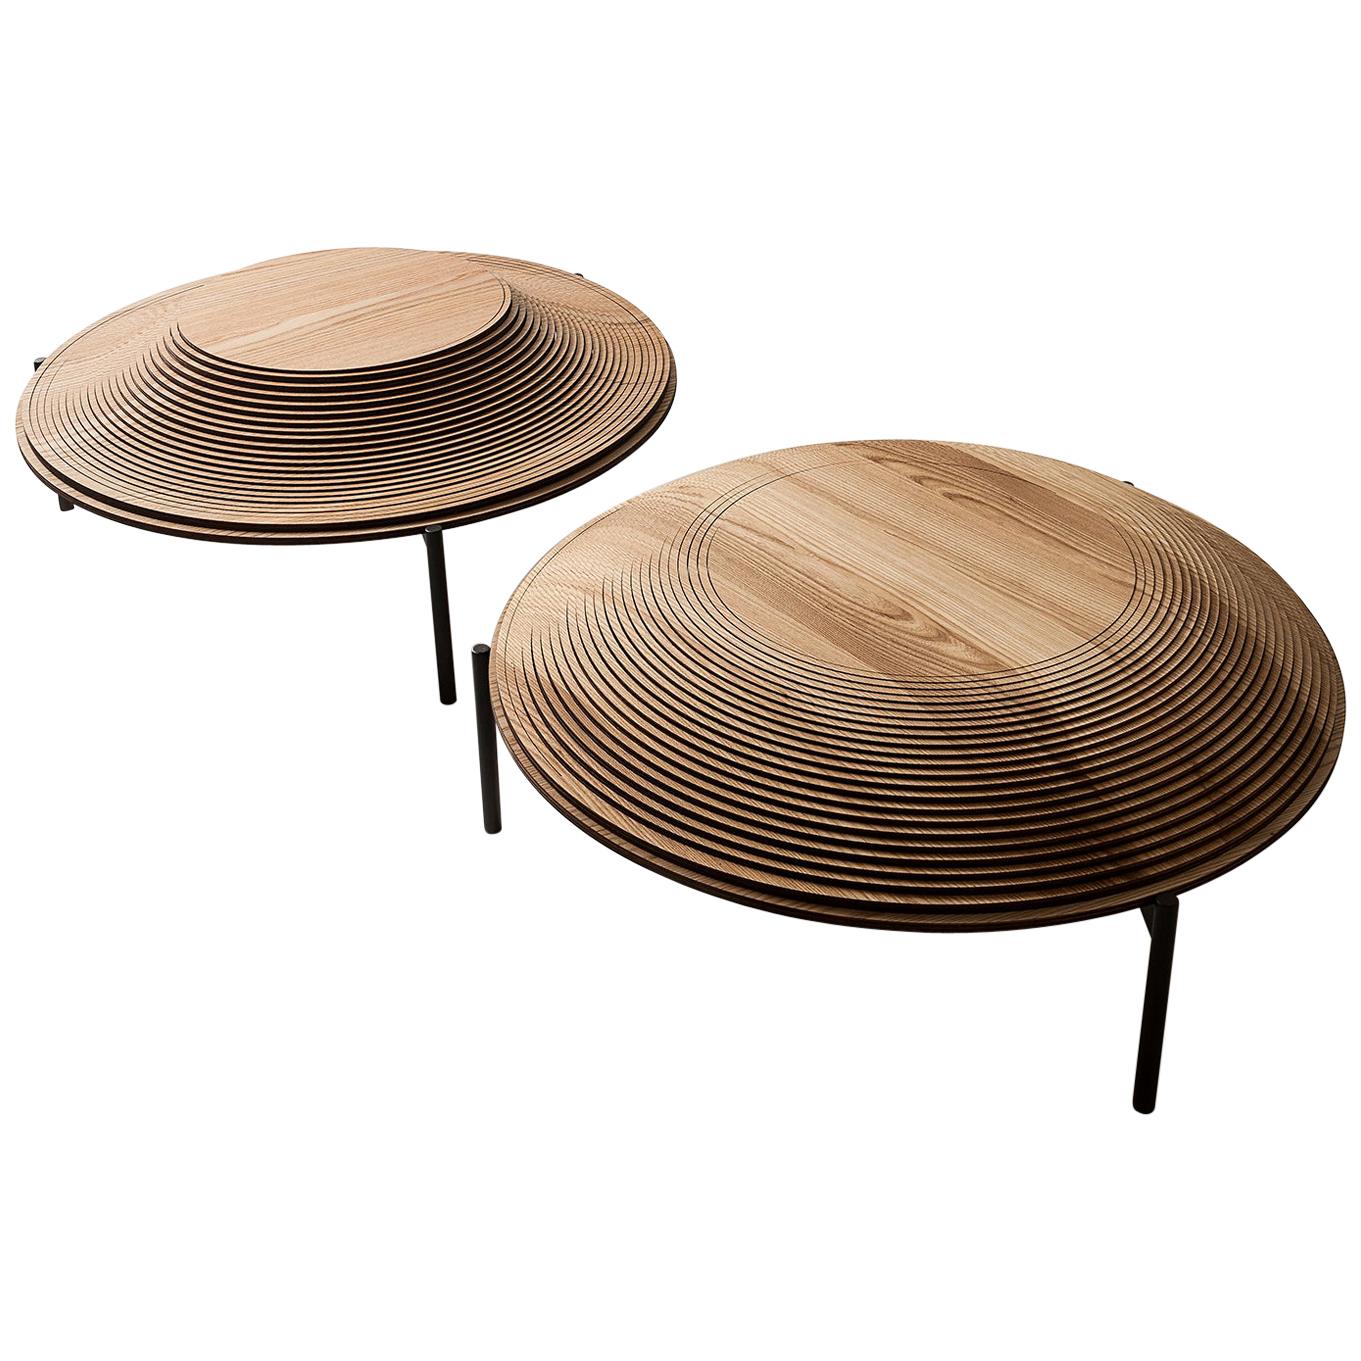 Table basse moderne sculpturale en bois « Dome 2 and 3 » de Sebastiano Bottos, Italie